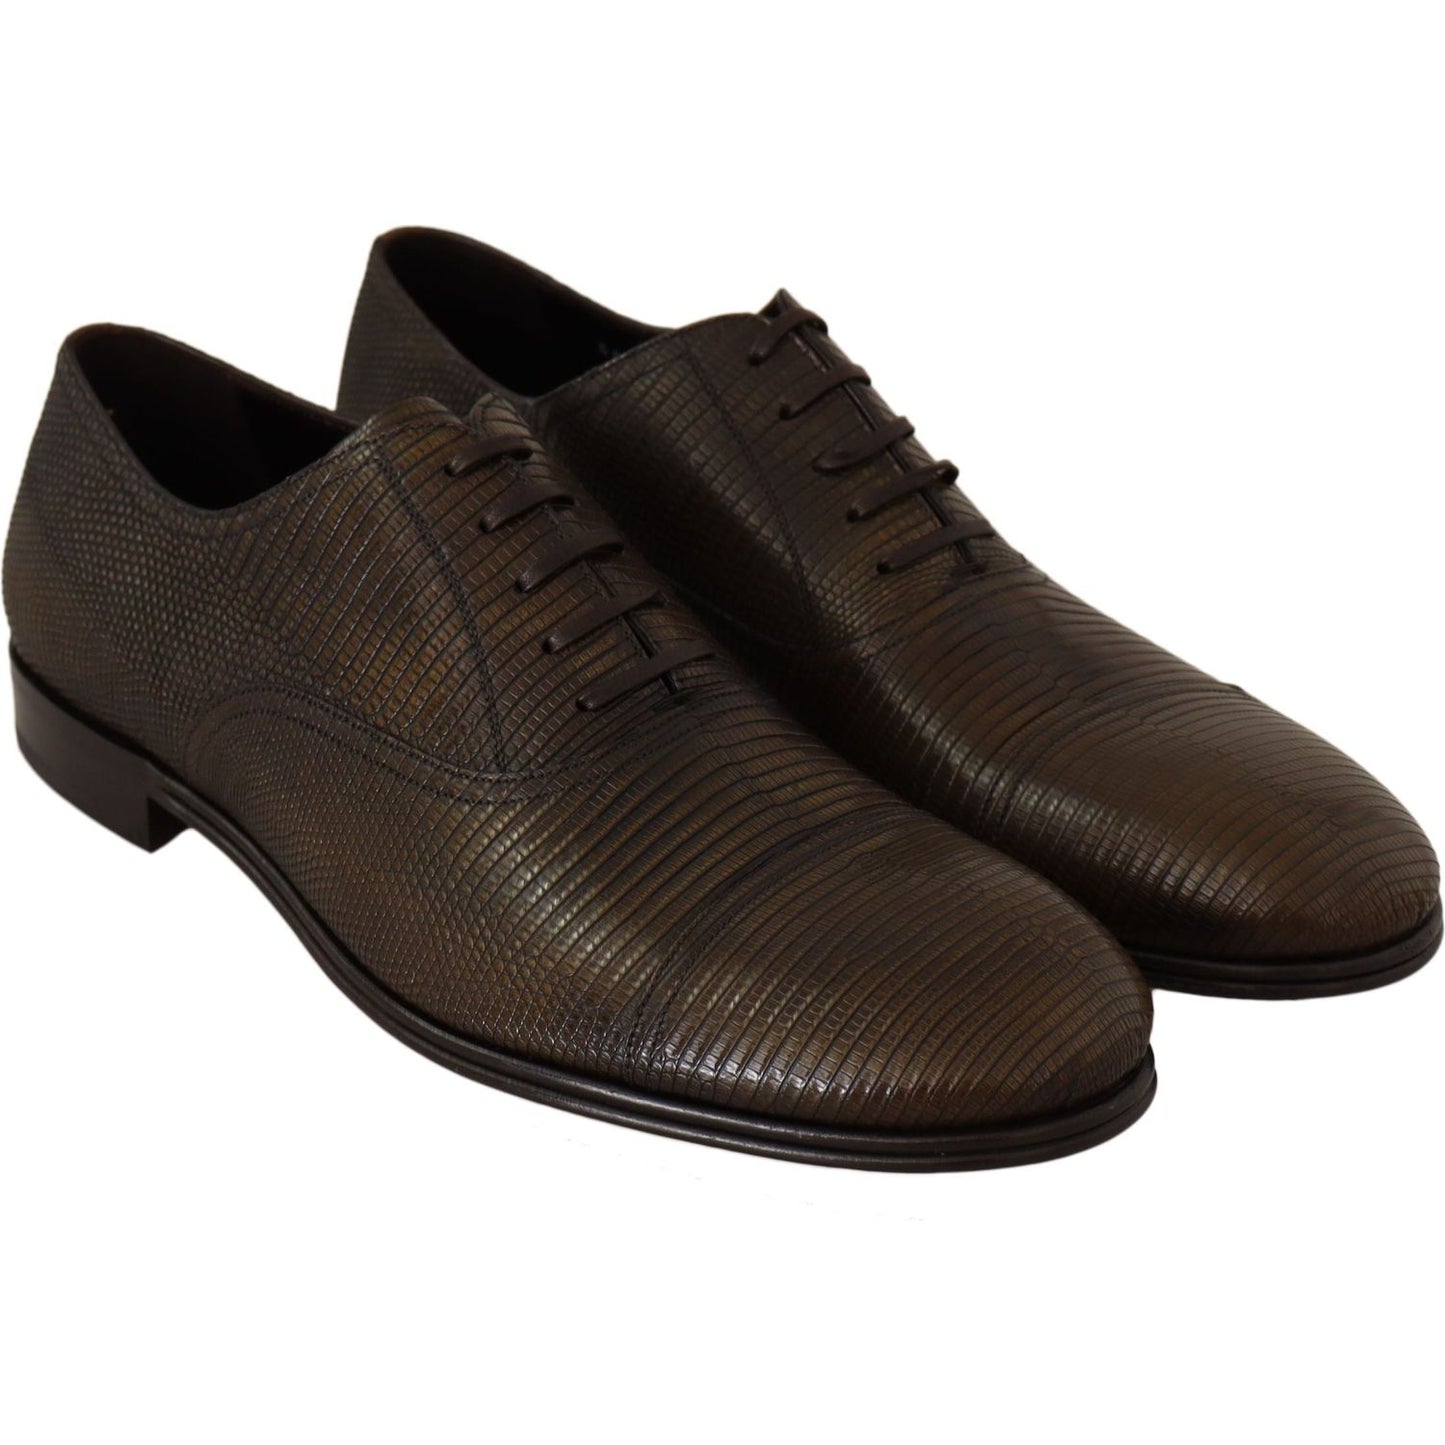 Dolce & Gabbana Elegant Shiny Leather Oxford Shoes brown-lizard-leather-dress-oxford-shoes Dress Shoes IMG_0053-scaled-1dfc0c6c-0dd.jpg